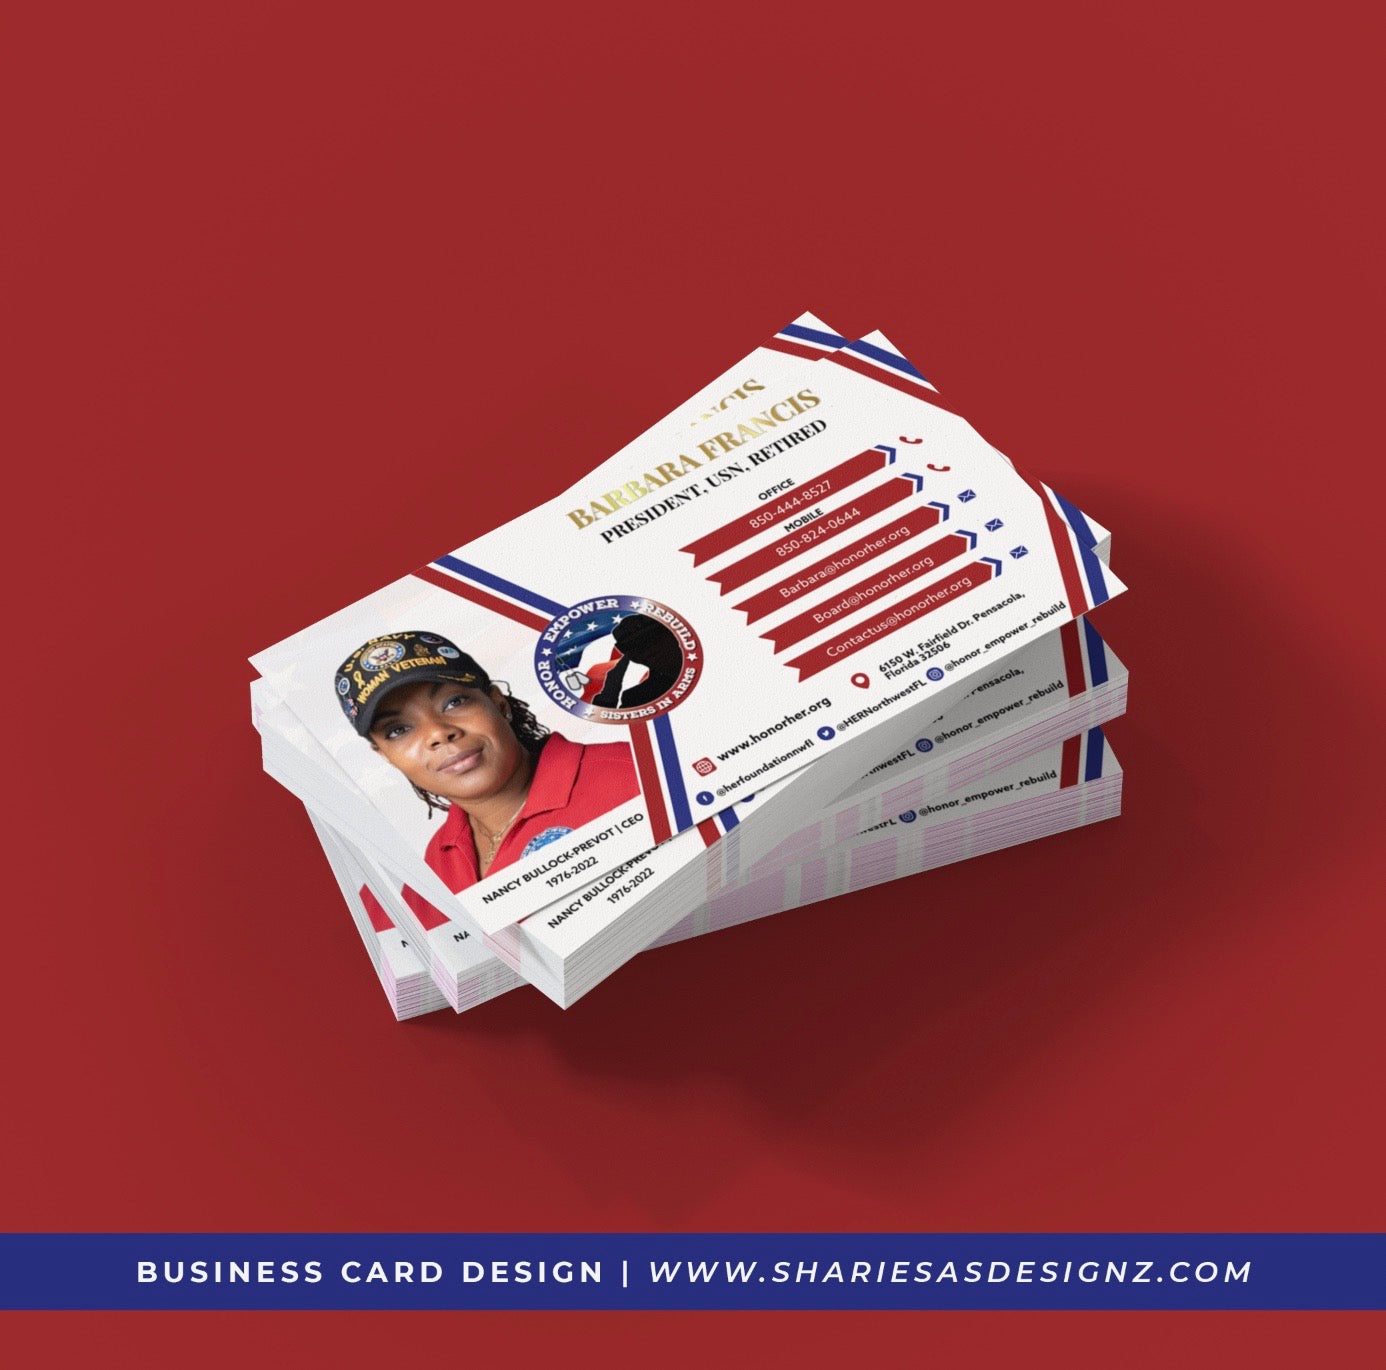 Business Card Design + Print